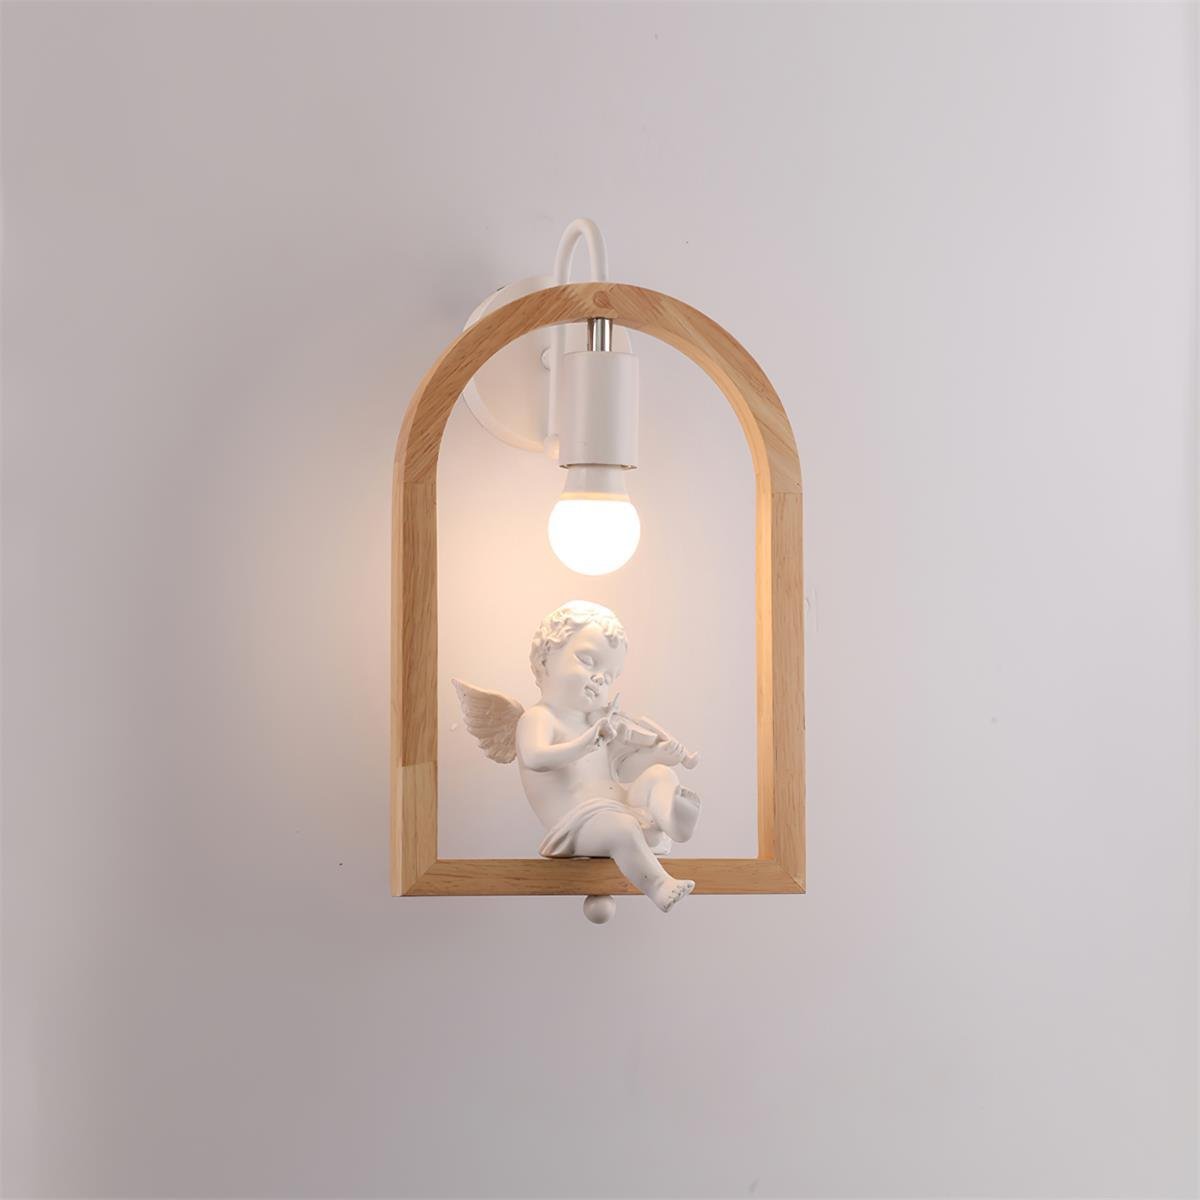 Resin Wall Light Model B with Wood Bird Design, Diameter 9.1" x Height 13.2" (23cm x 33.5cm), Made of Wood